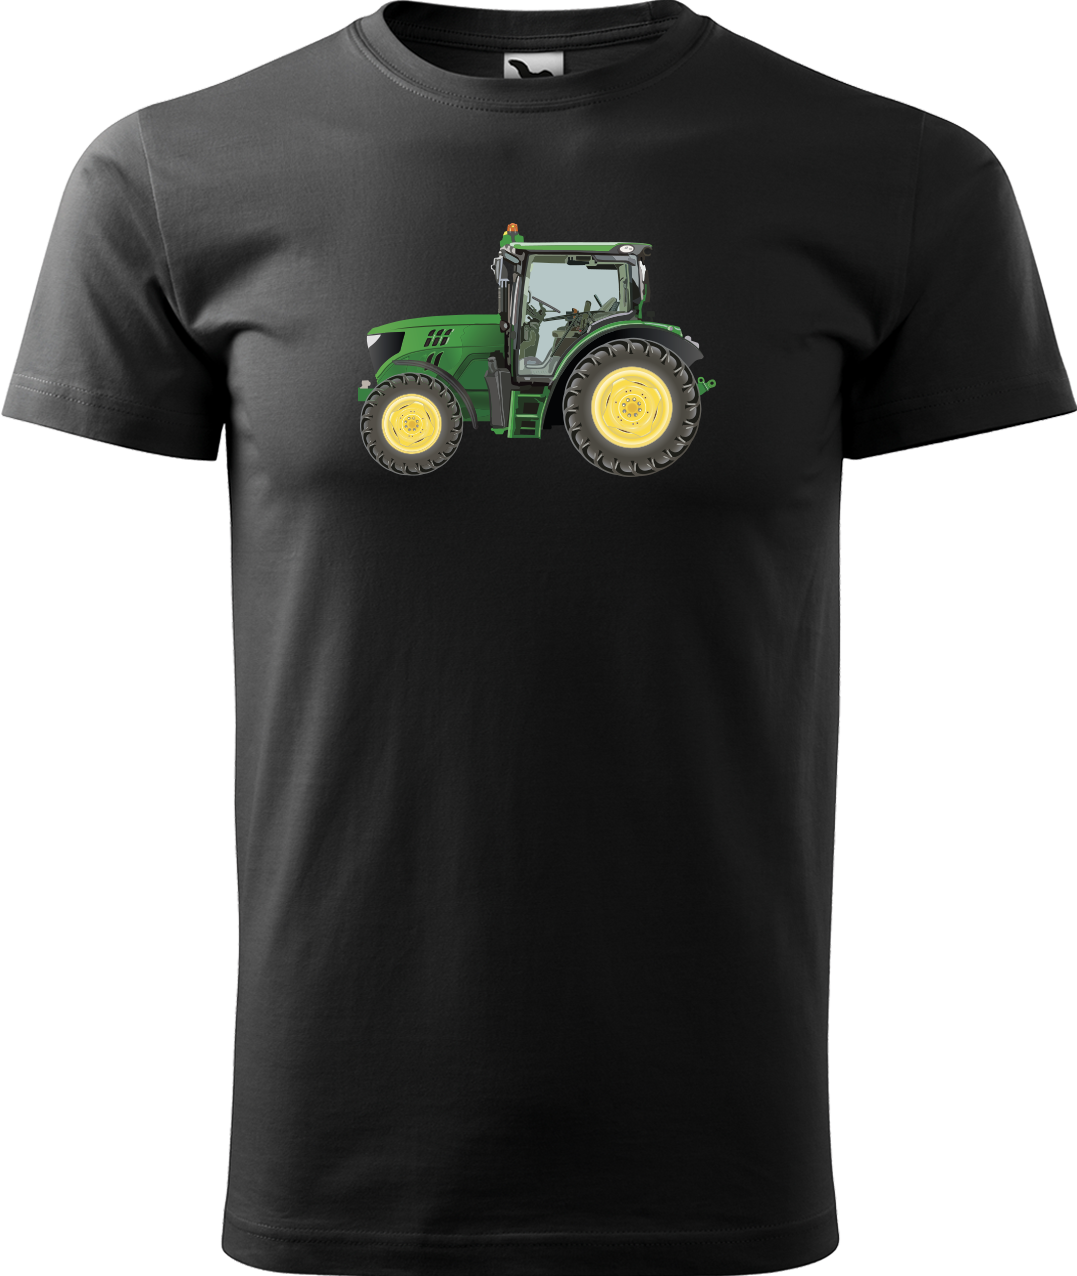 Tričko s traktorem - Zelený traktor Velikost: M, Barva: Černá (01)